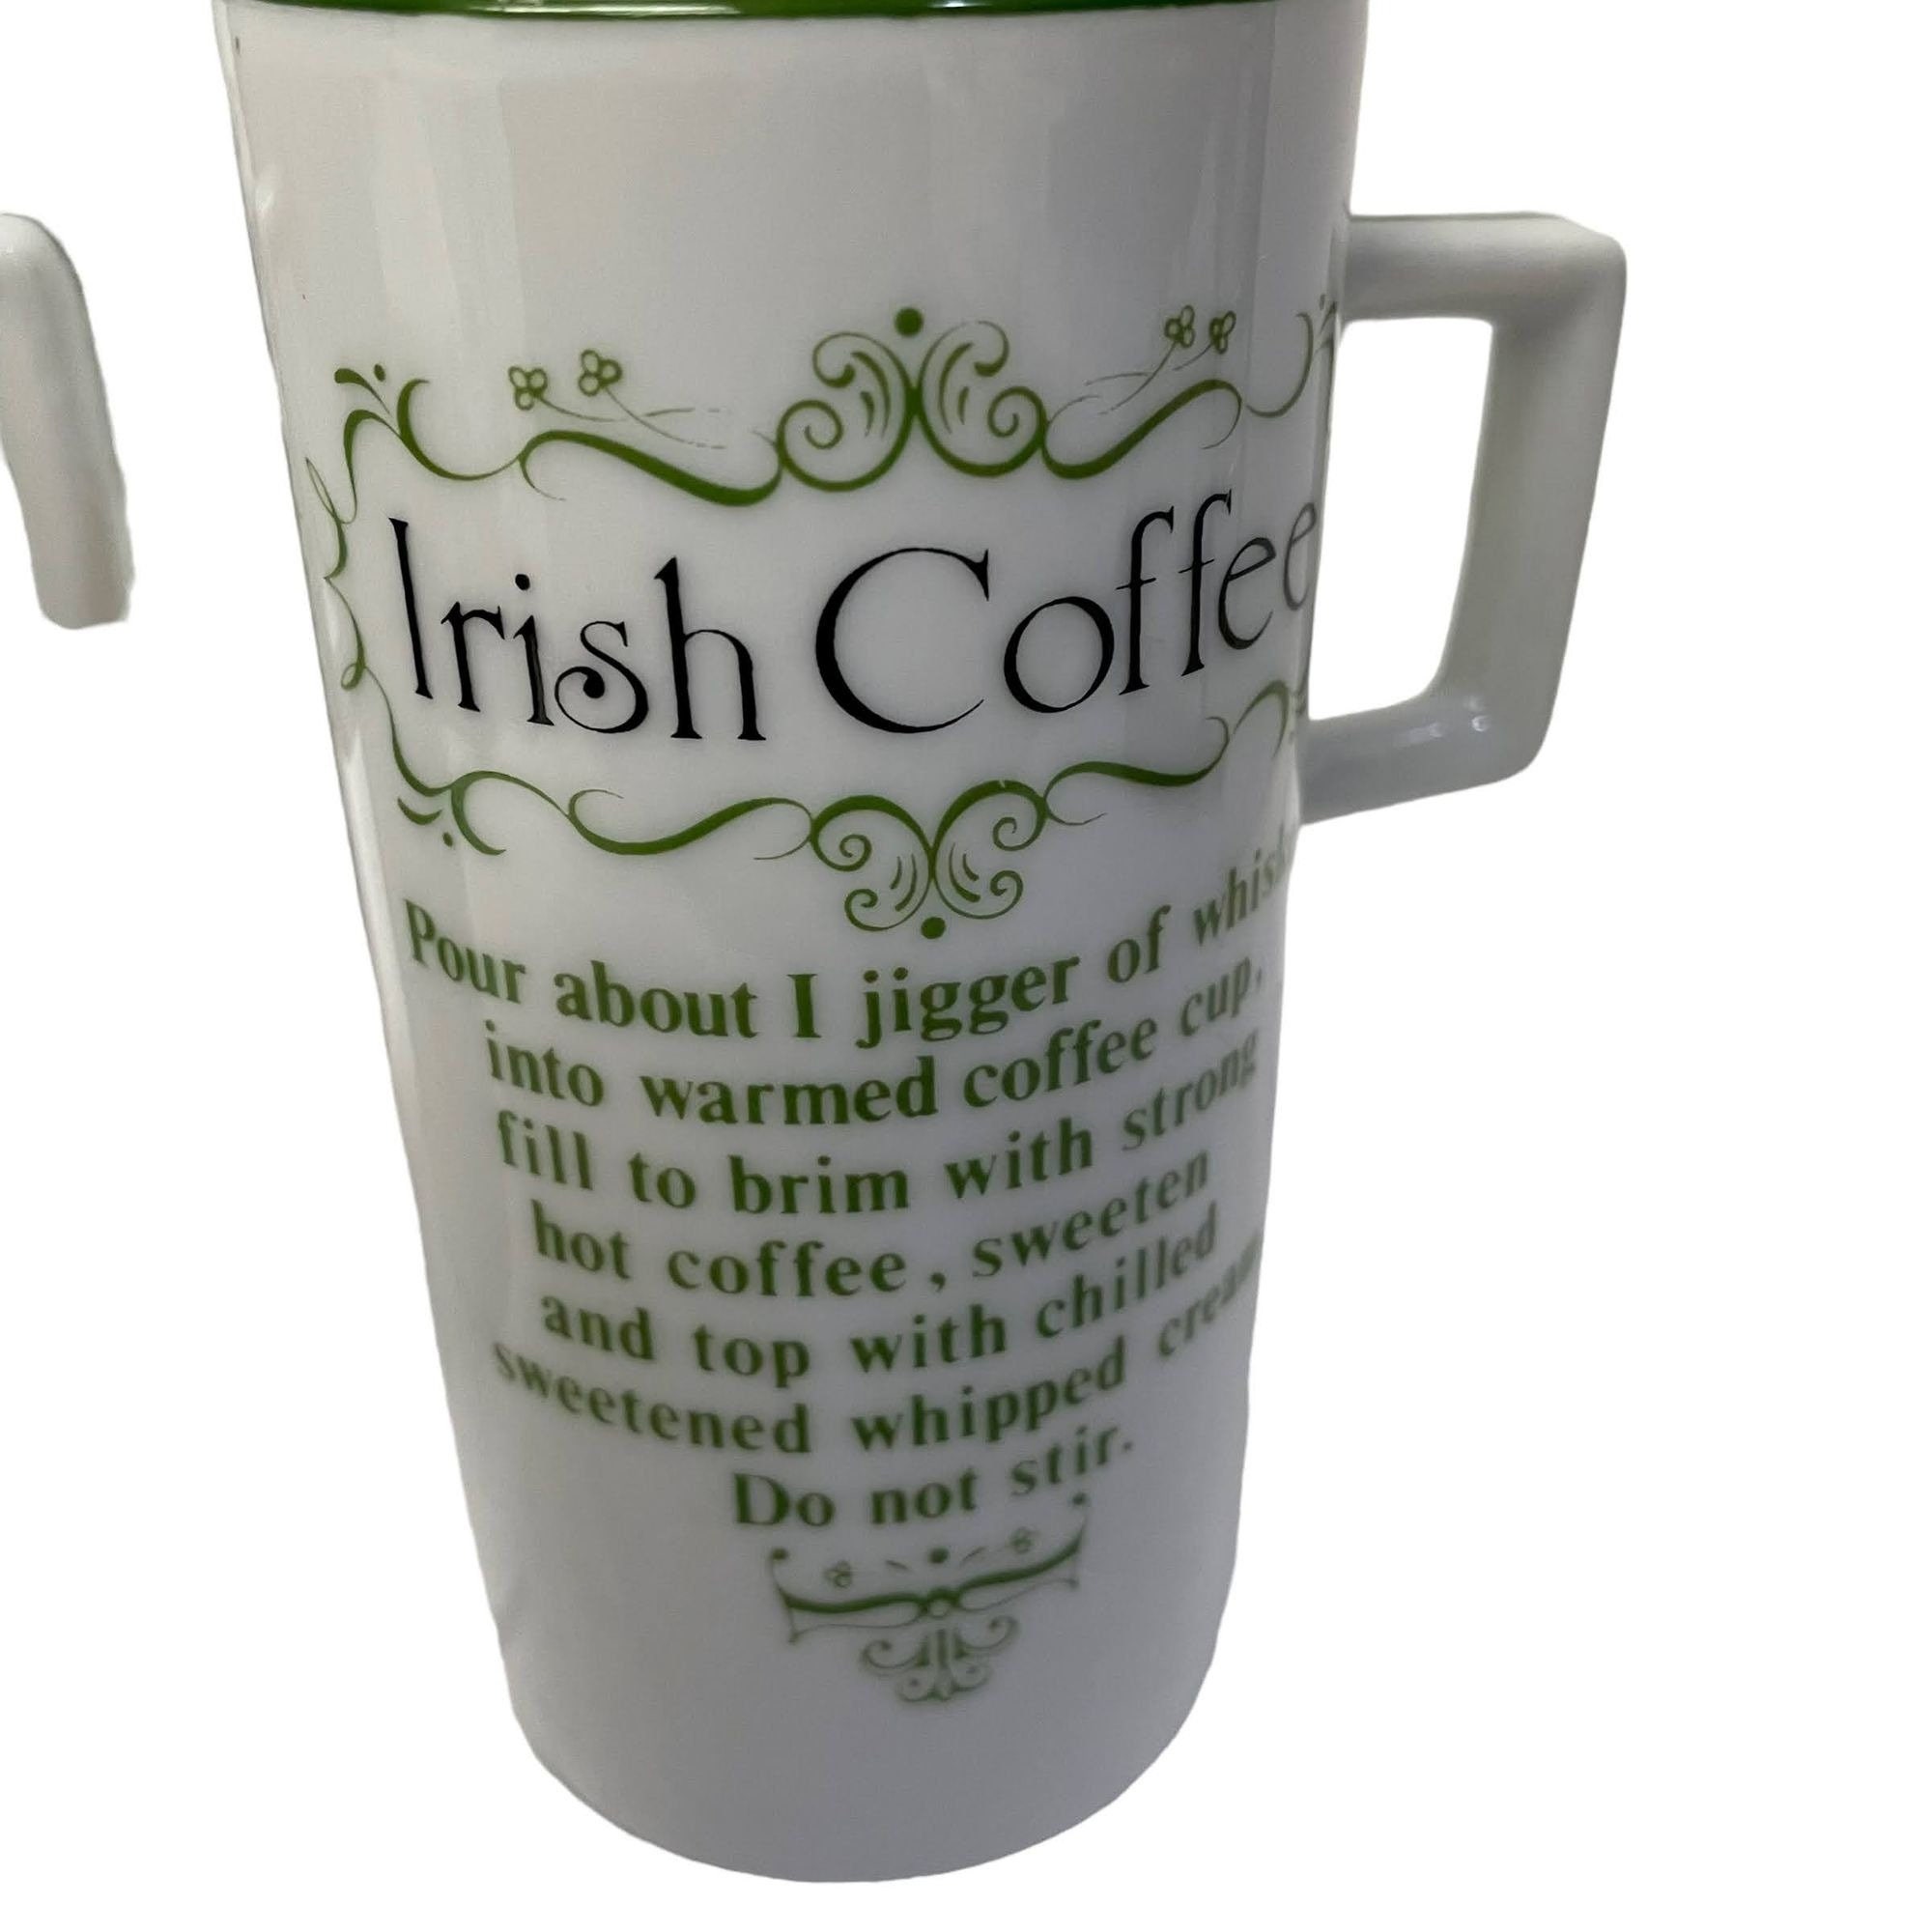 Vintage Irish Coffee Mugs With Drink Recipe Printed on Mugs (Set